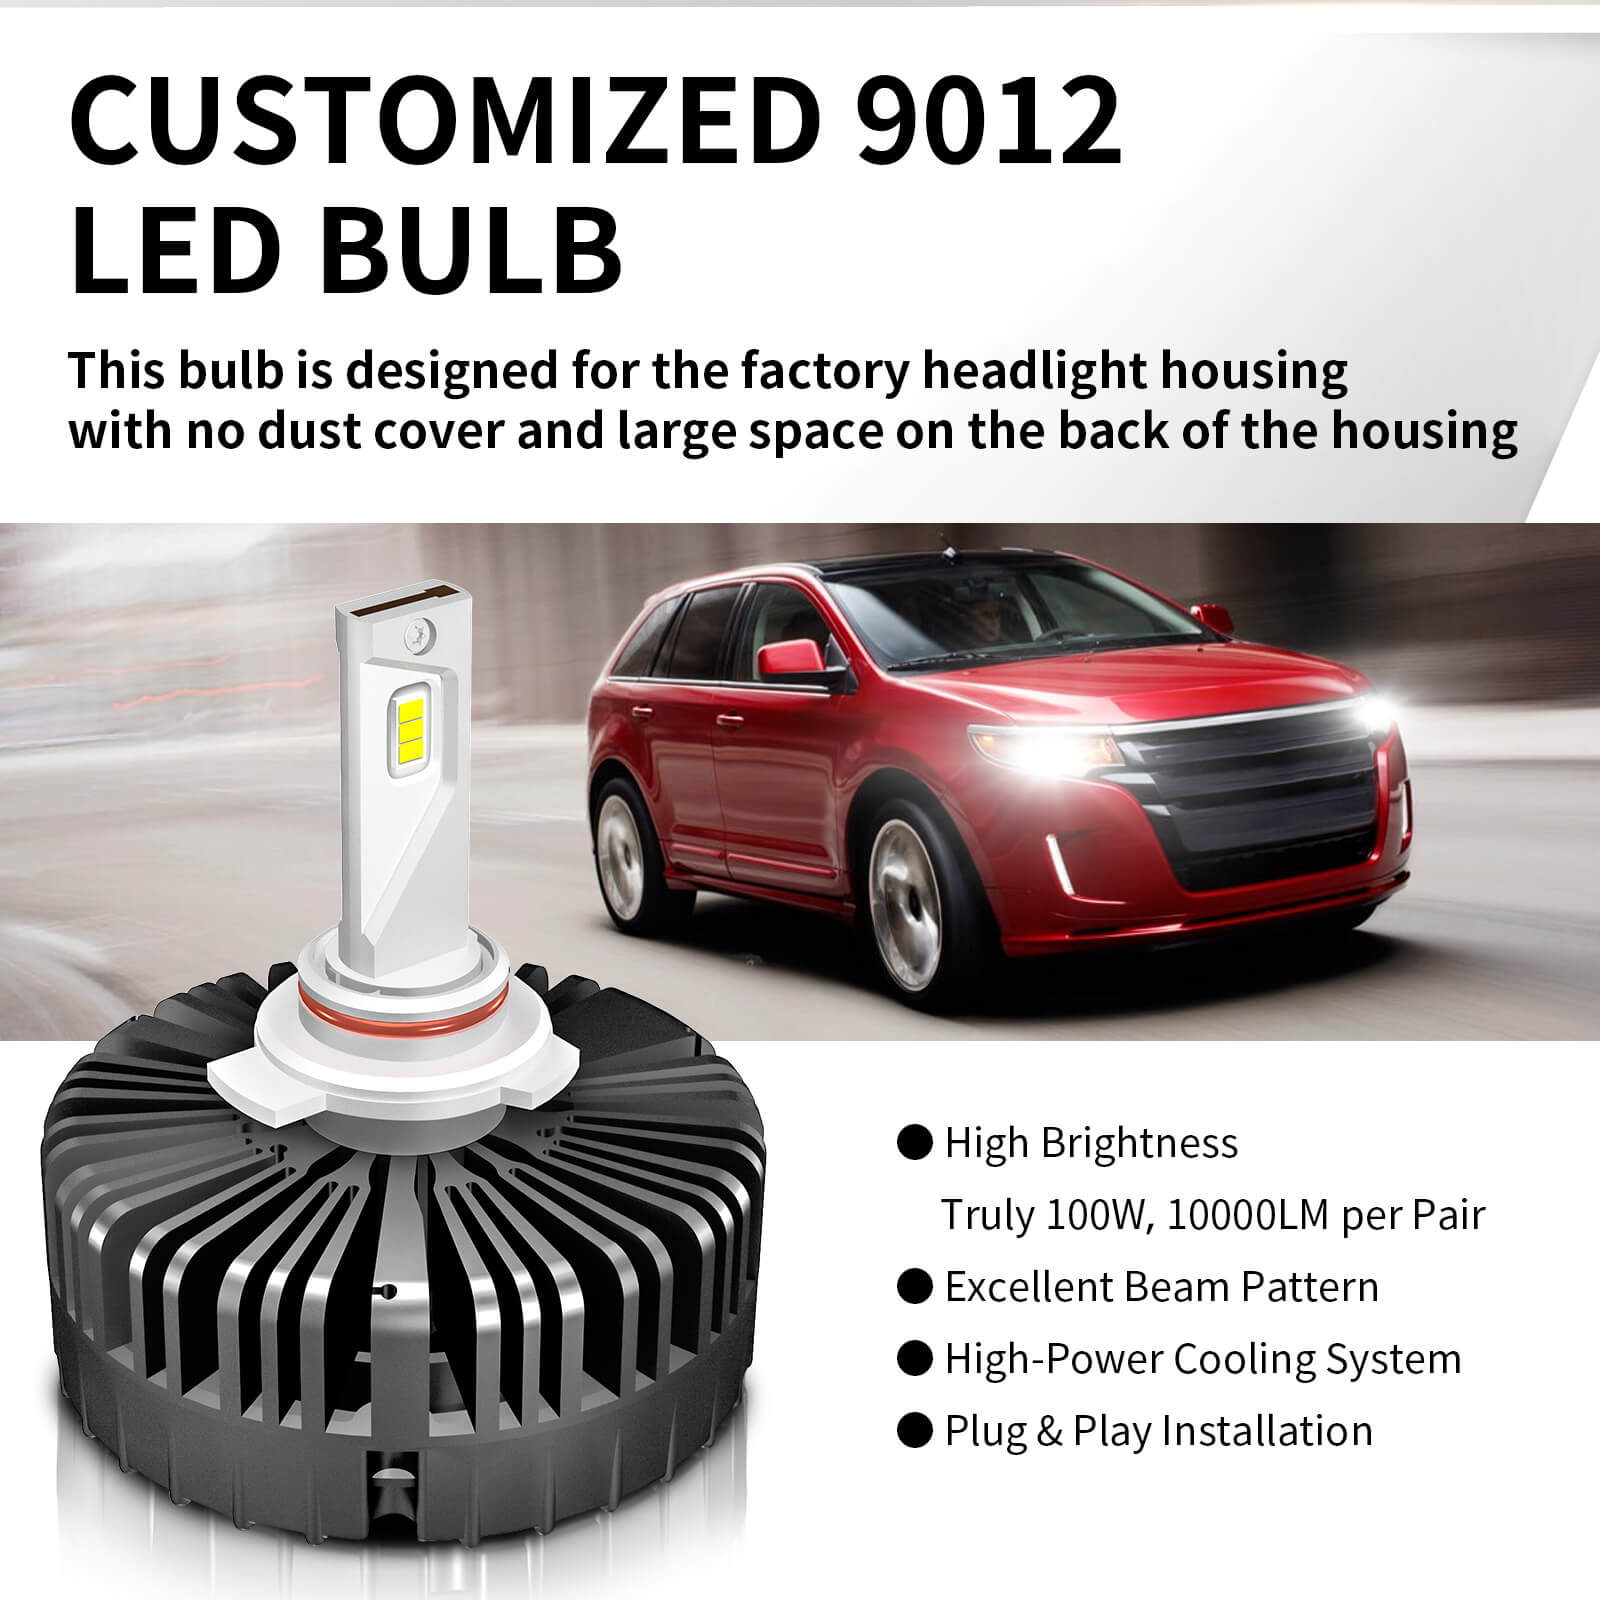 LED bulb HIR2 Special for Lenticular Headlights - 10,000 Lumens.